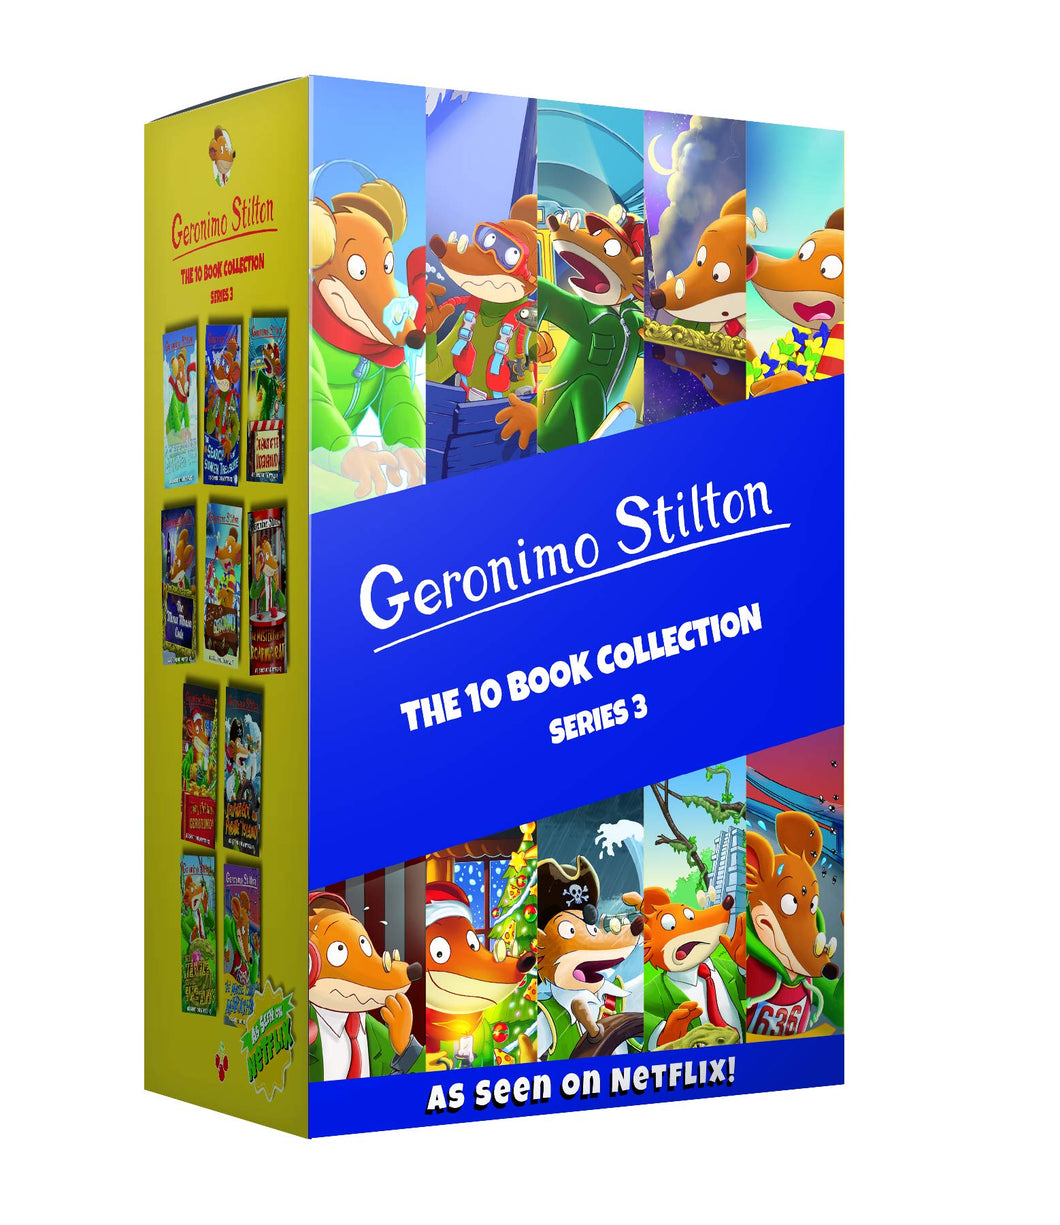 The Geronimo Stilton Collection: Series 3